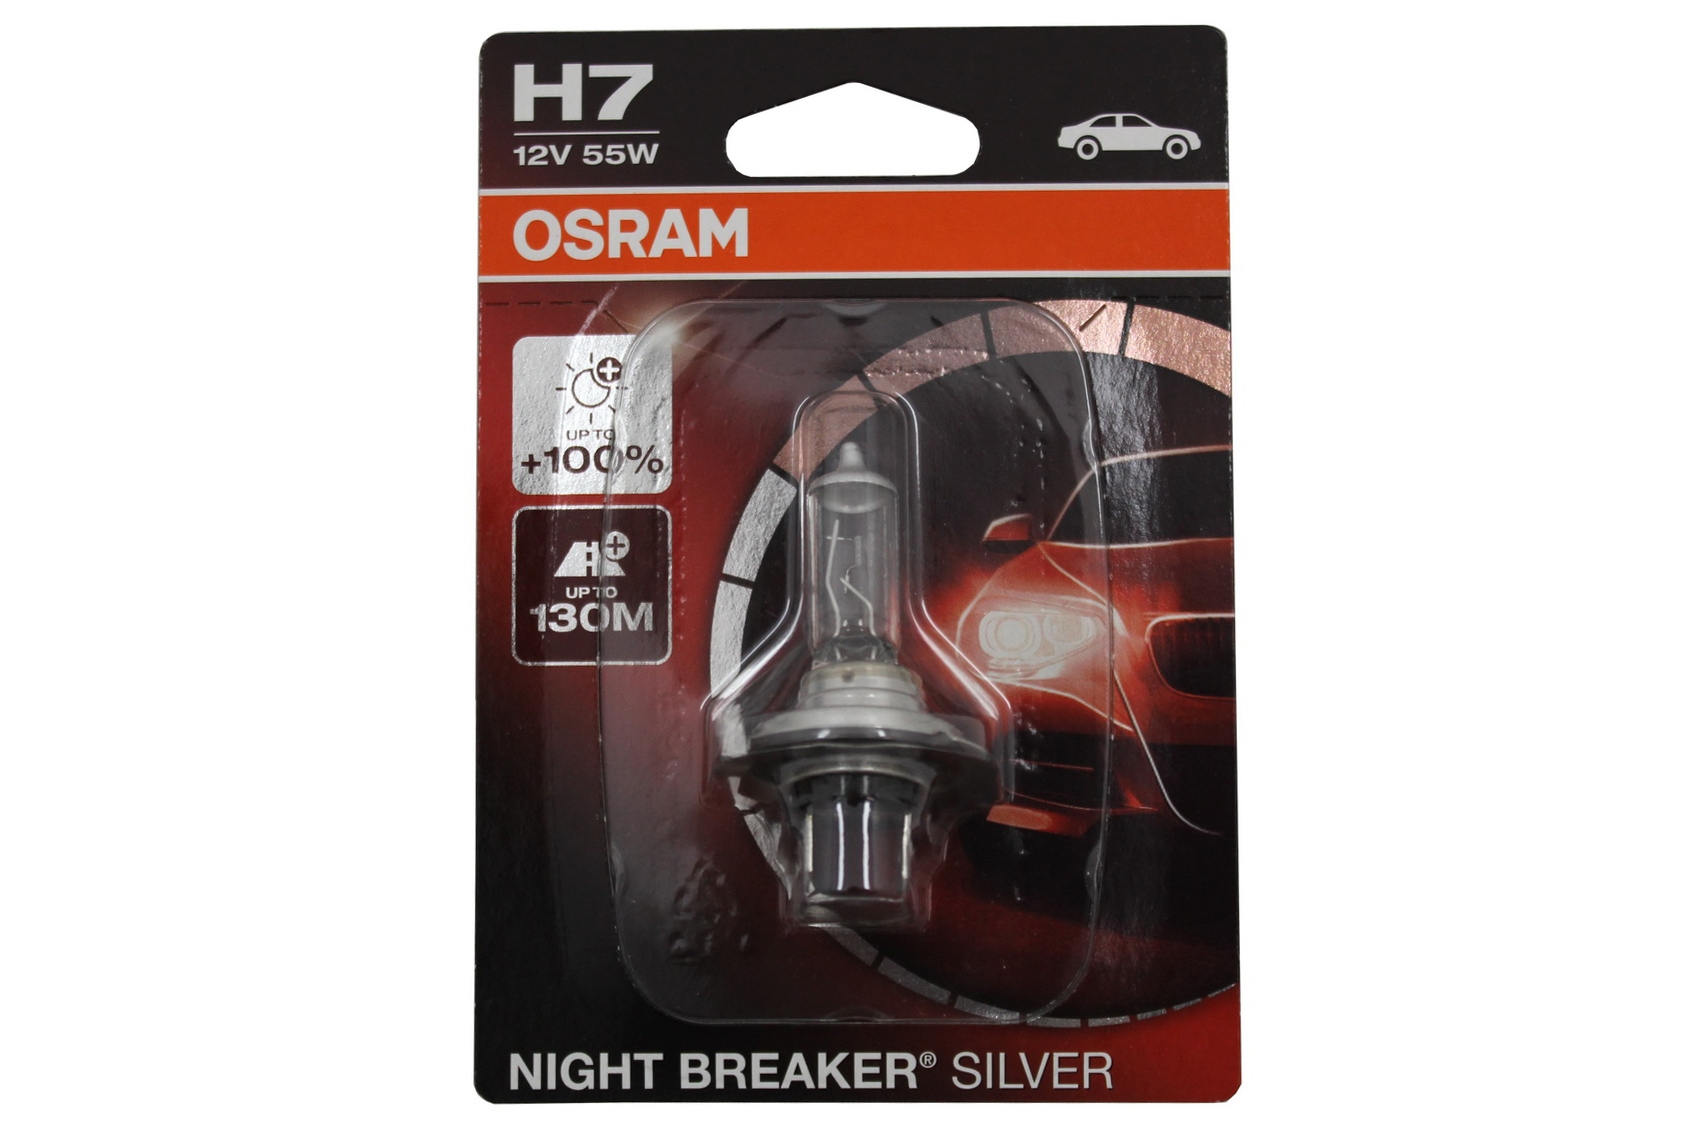 OSRAM halogén fényszóró izzó NIGHT BREAKER SILVER 64210NBS-01B H7 12V 55W buborékfólia (1 db)